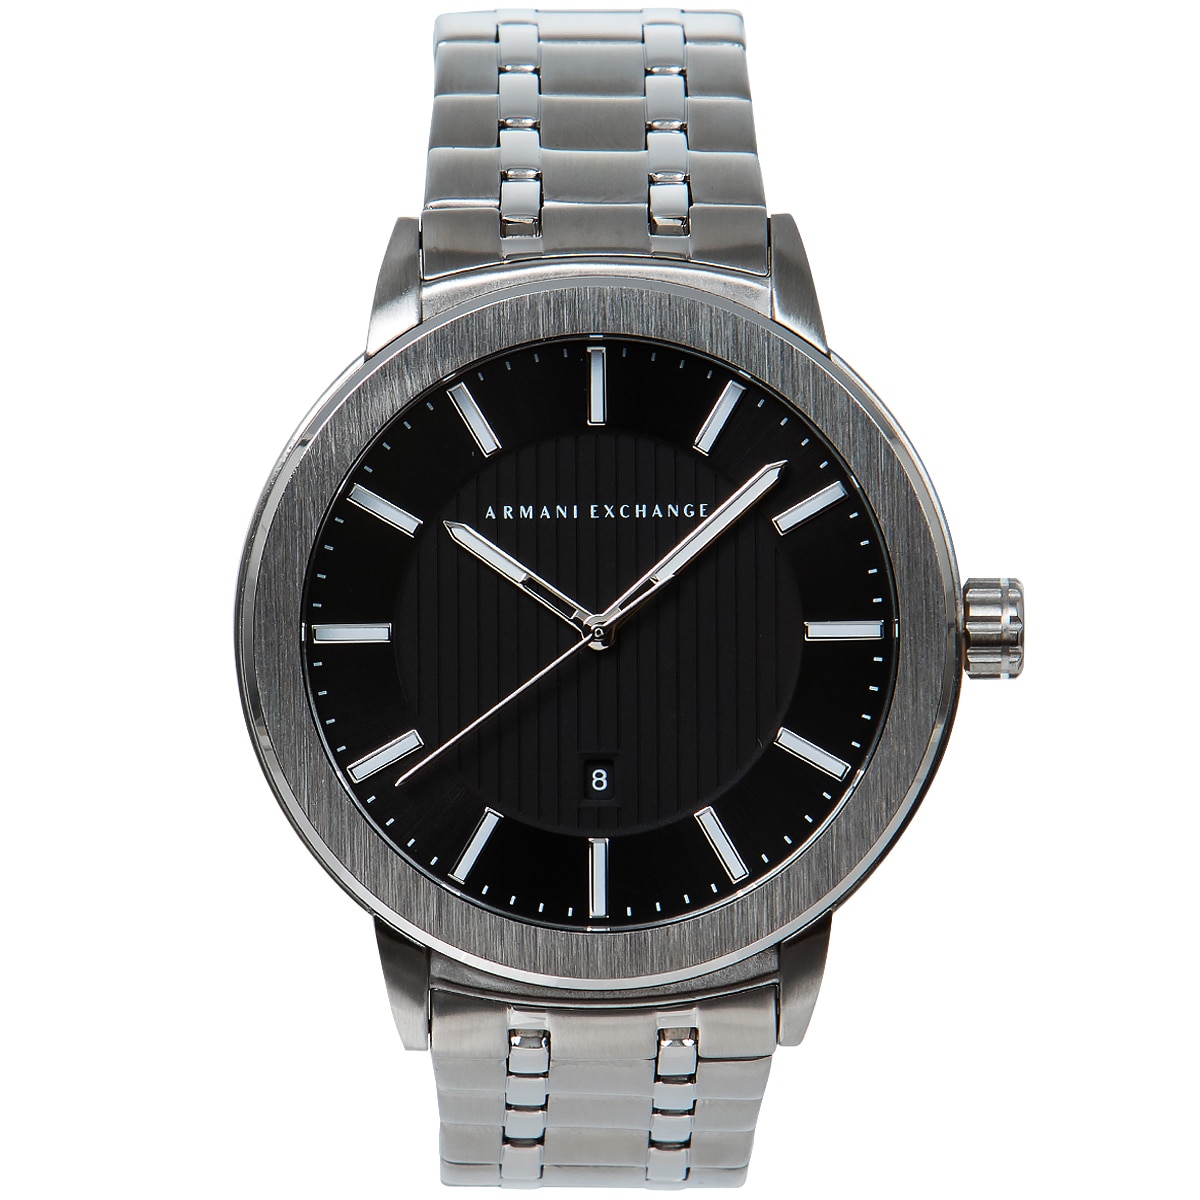 Armani Exchange Men's Watch - Stainless steel/Black Dial